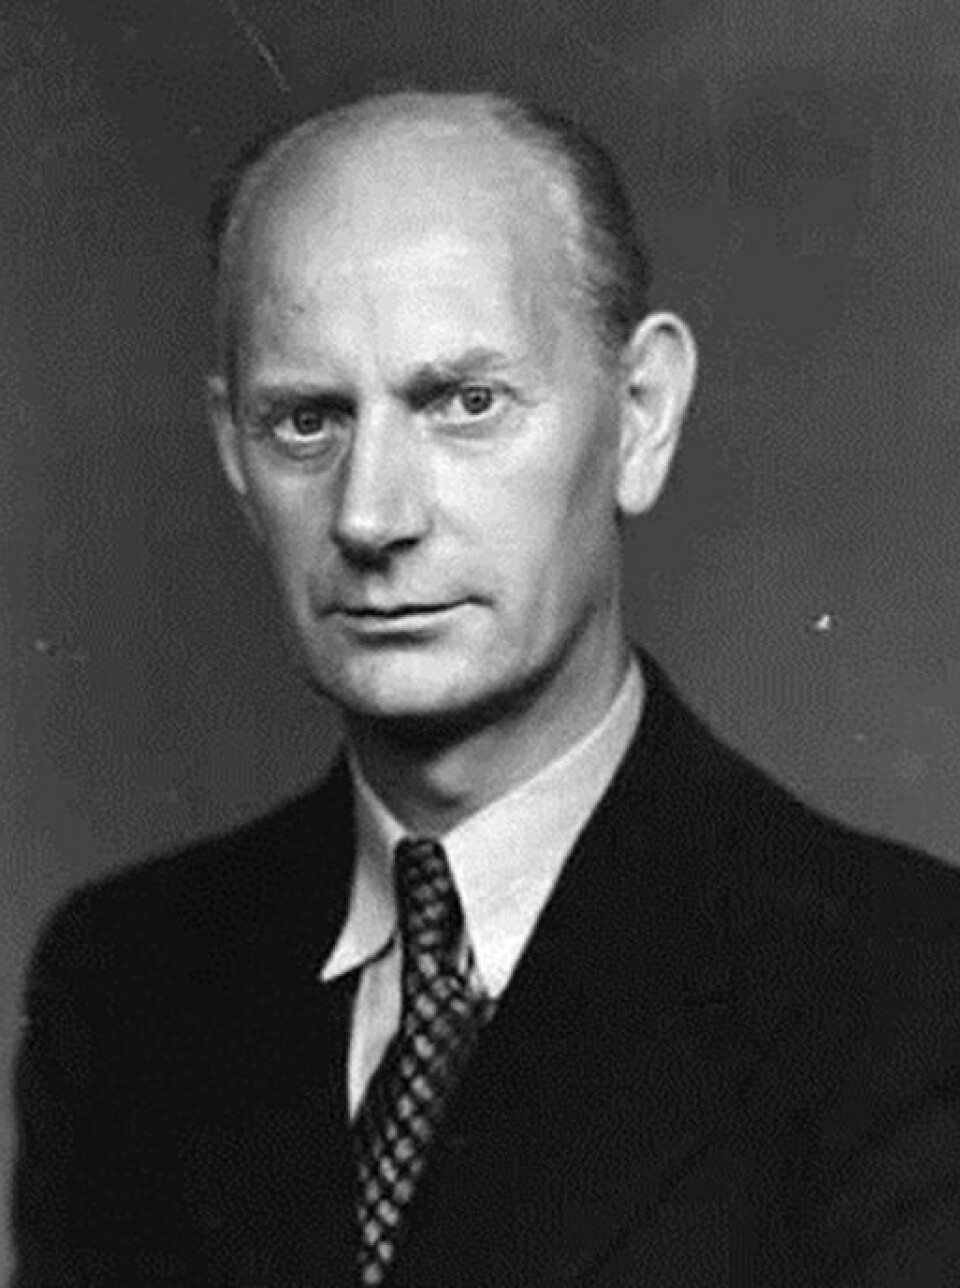 Som ung mann så Einar Gerhardsen, senere kjent som Norges «landsfader», den sovjetiske sosialismen som en løsning på verdens problemer.